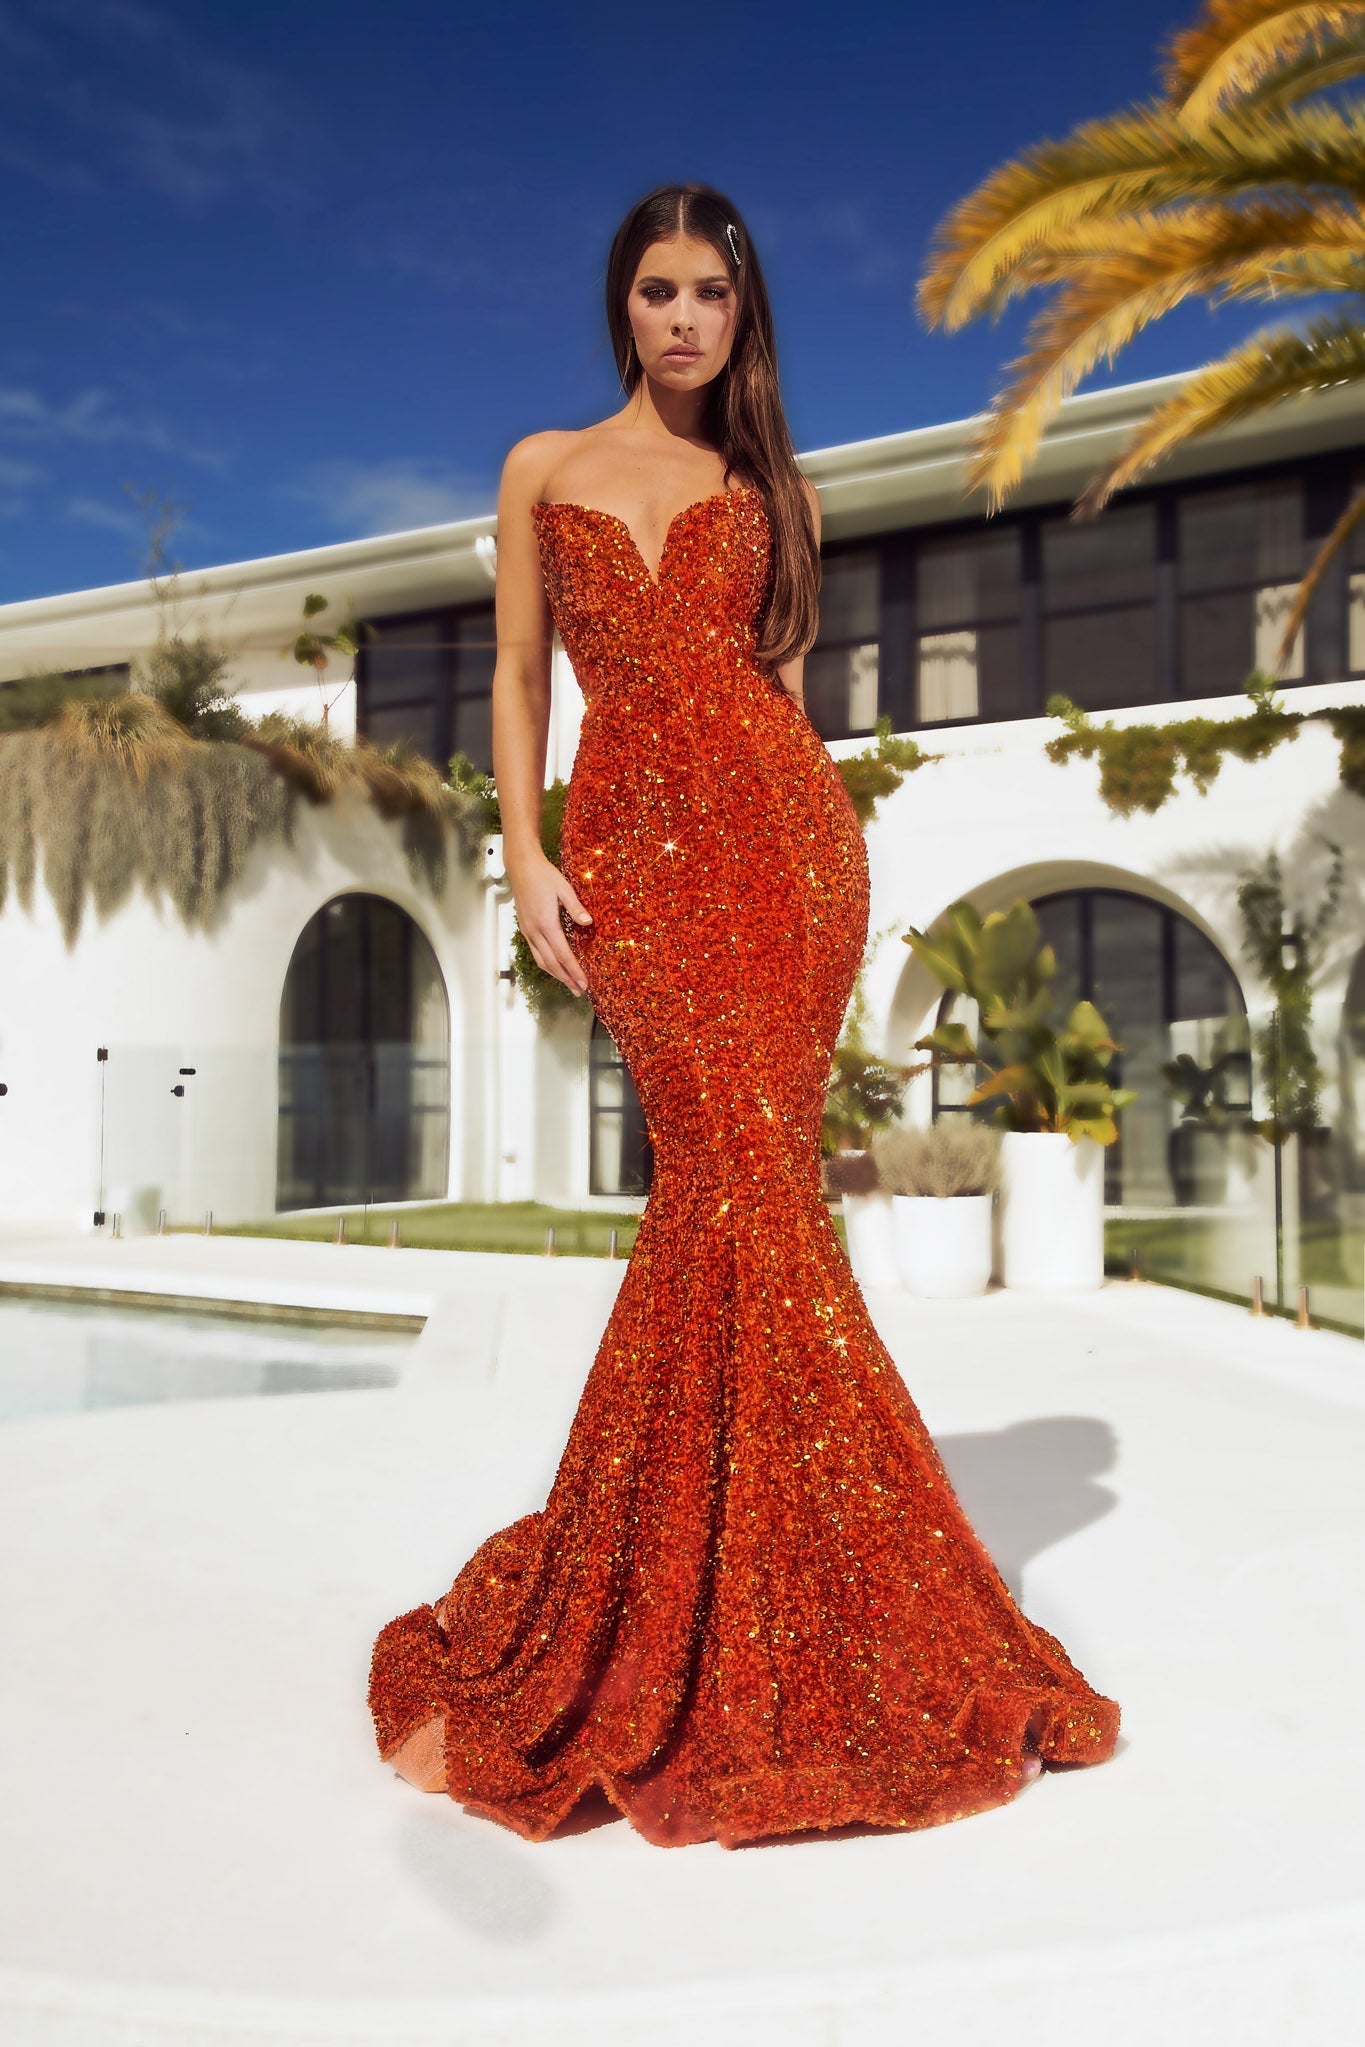 Portia & Scarlett PS21208 Burnt Orange Strapless Sequin Mermaid Formal Gown